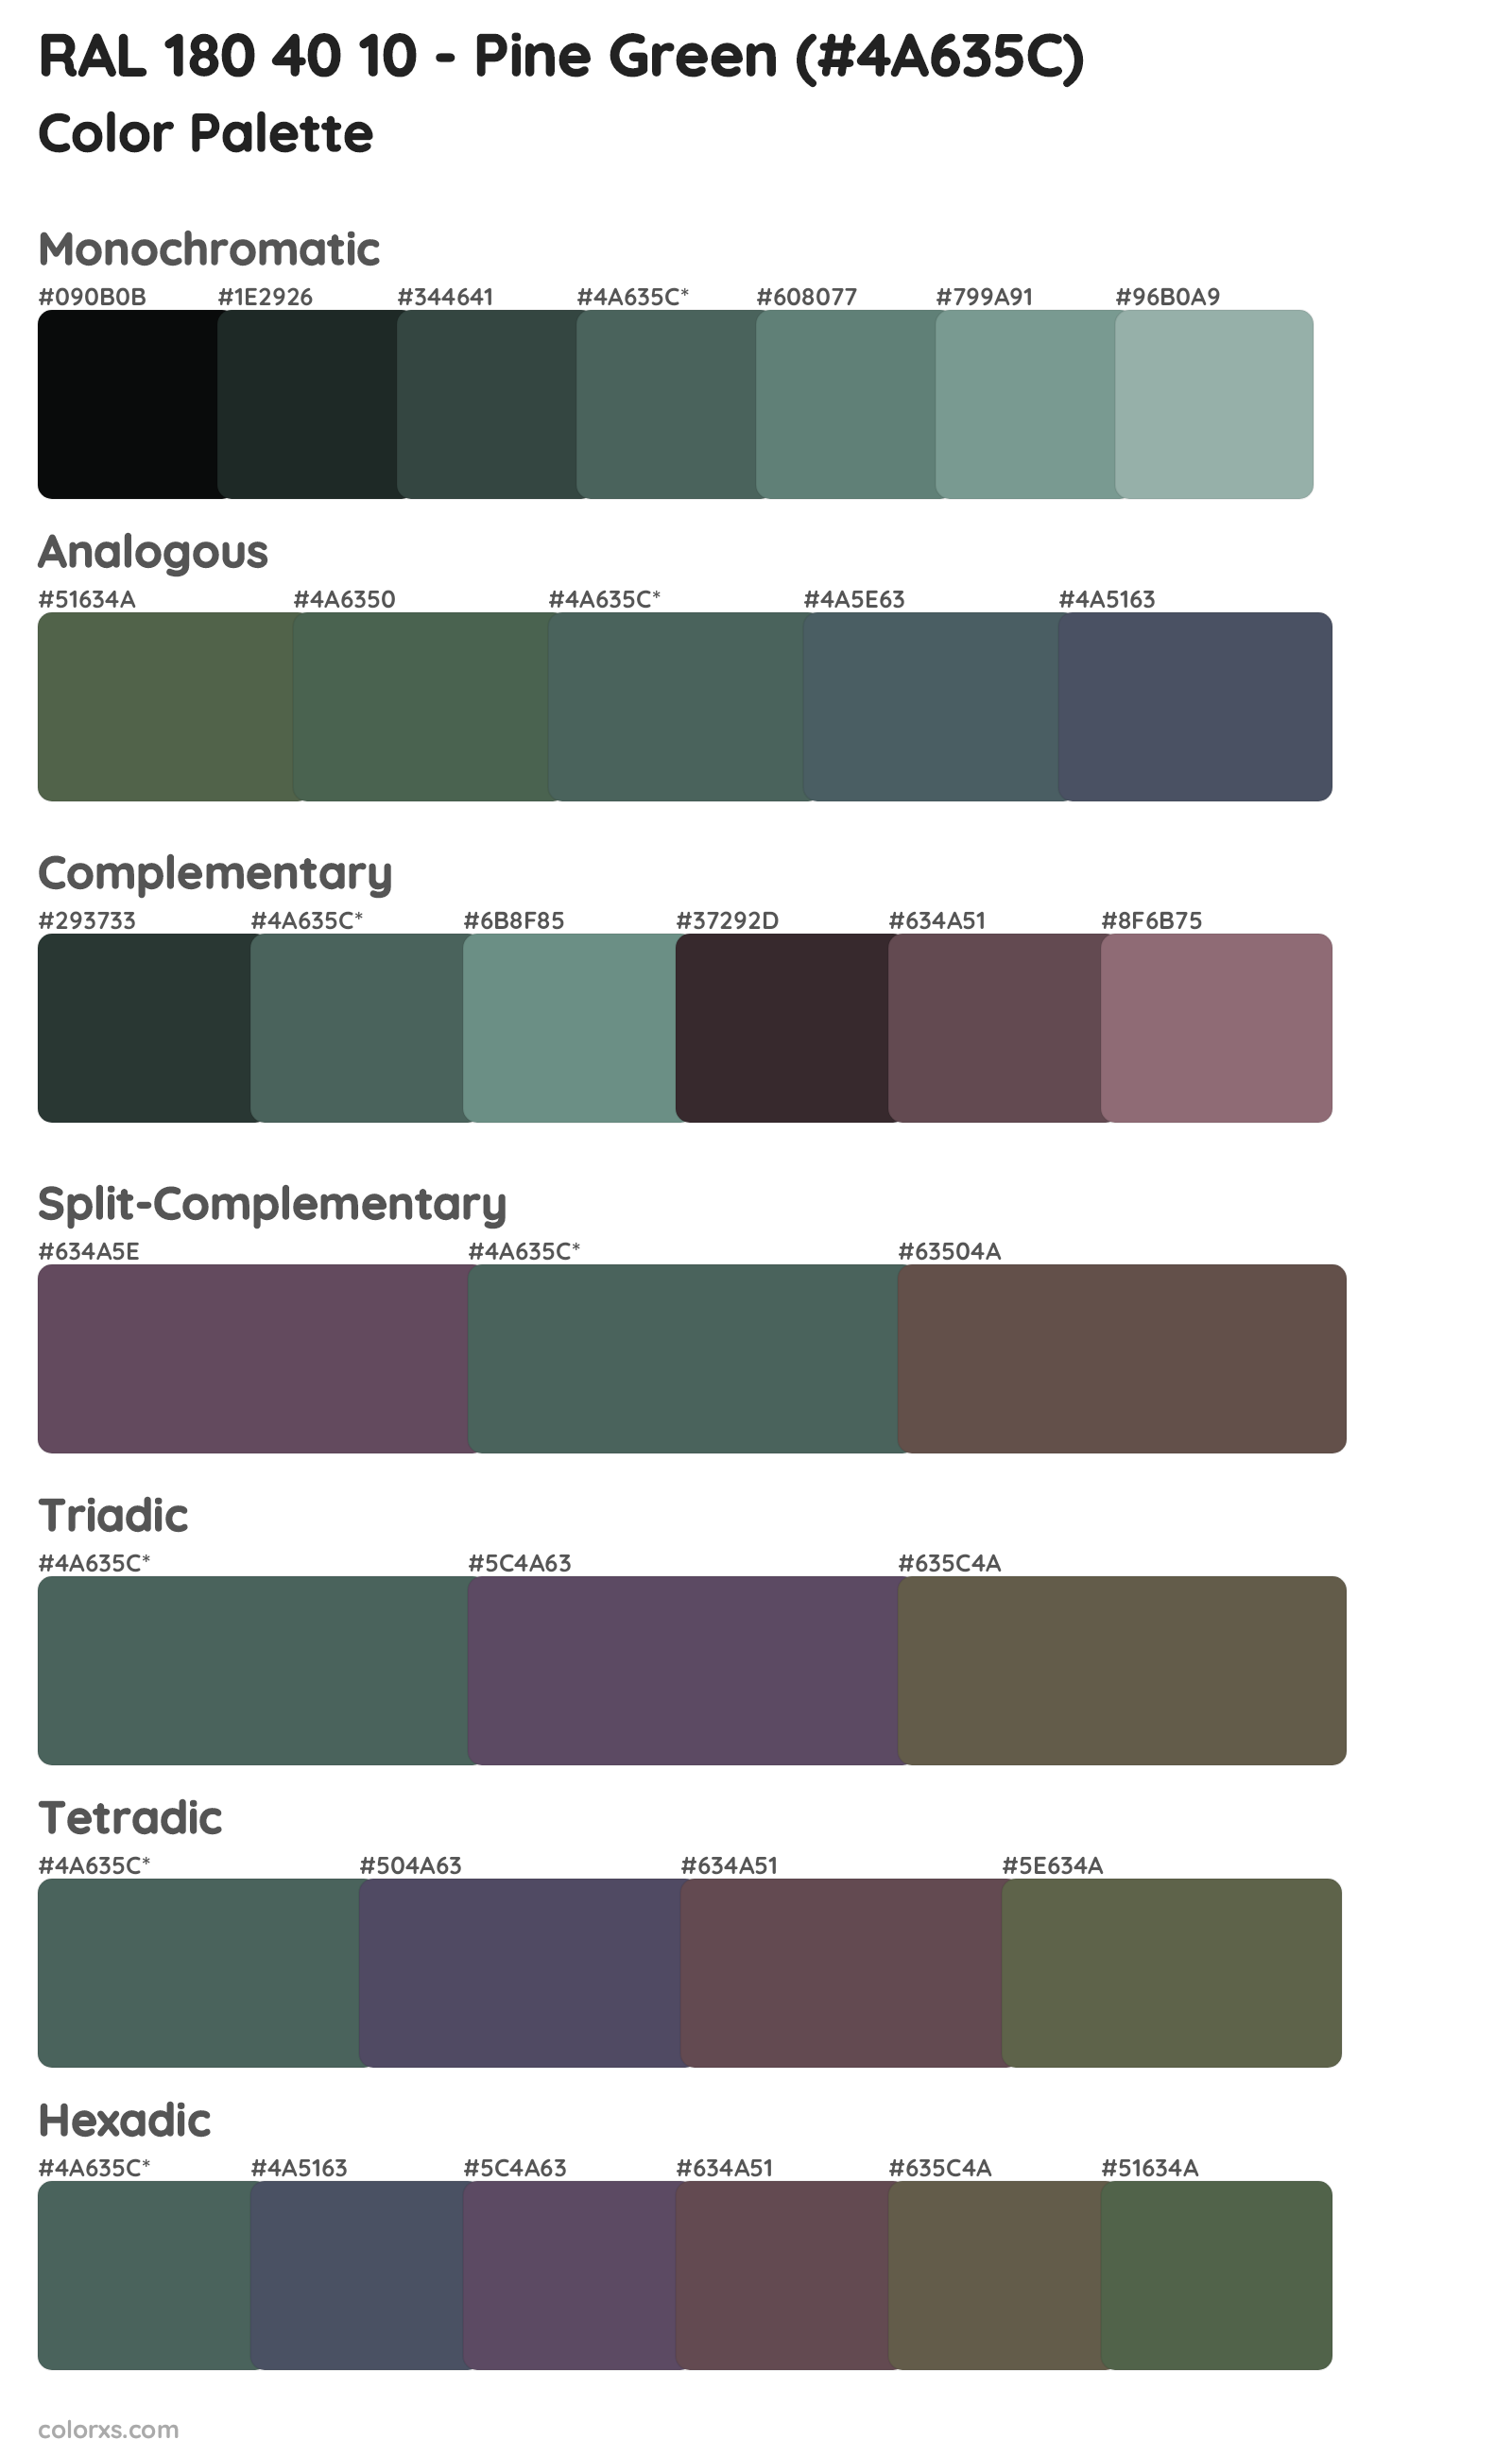 RAL 180 40 10 - Pine Green Color Scheme Palettes